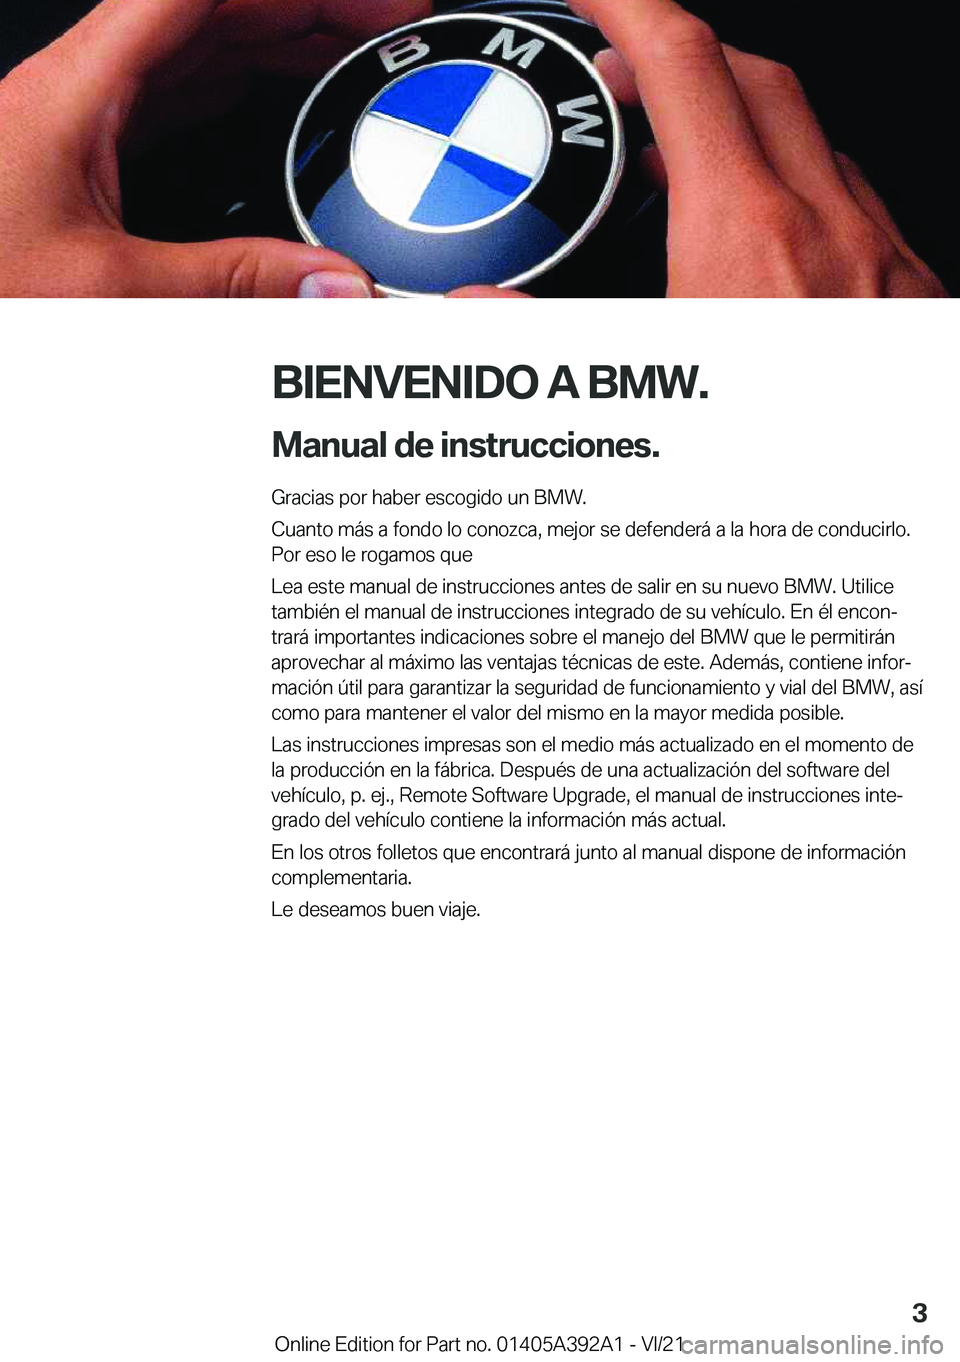 BMW 4 SERIES 2022  Manuales de Empleo (in Spanish) �B�I�E�N�V�E�N�I�D�O��A��B�M�W�.
�M�a�n�u�a�l��d�e��i�n�s�t�r�u�c�c�i�o�n�e�s�. �G�r�a�c�i�a�s��p�o�r��h�a�b�e�r��e�s�c�o�g�i�d�o��u�n��B�M�W�.
�C�u�a�n�t�o��m�